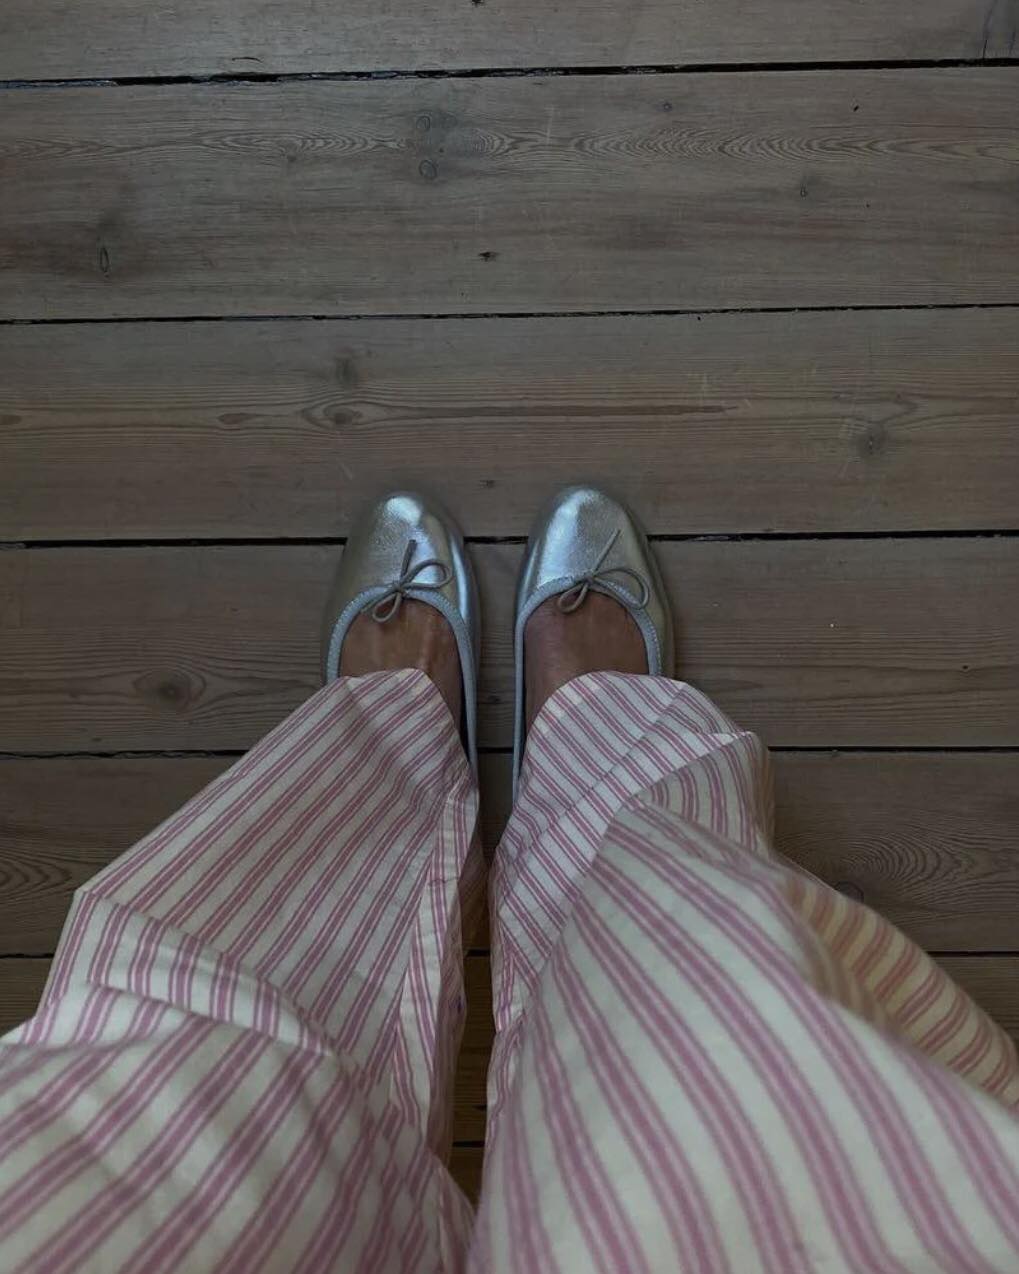 Asta Organic Cotton Pants - Pink stripe